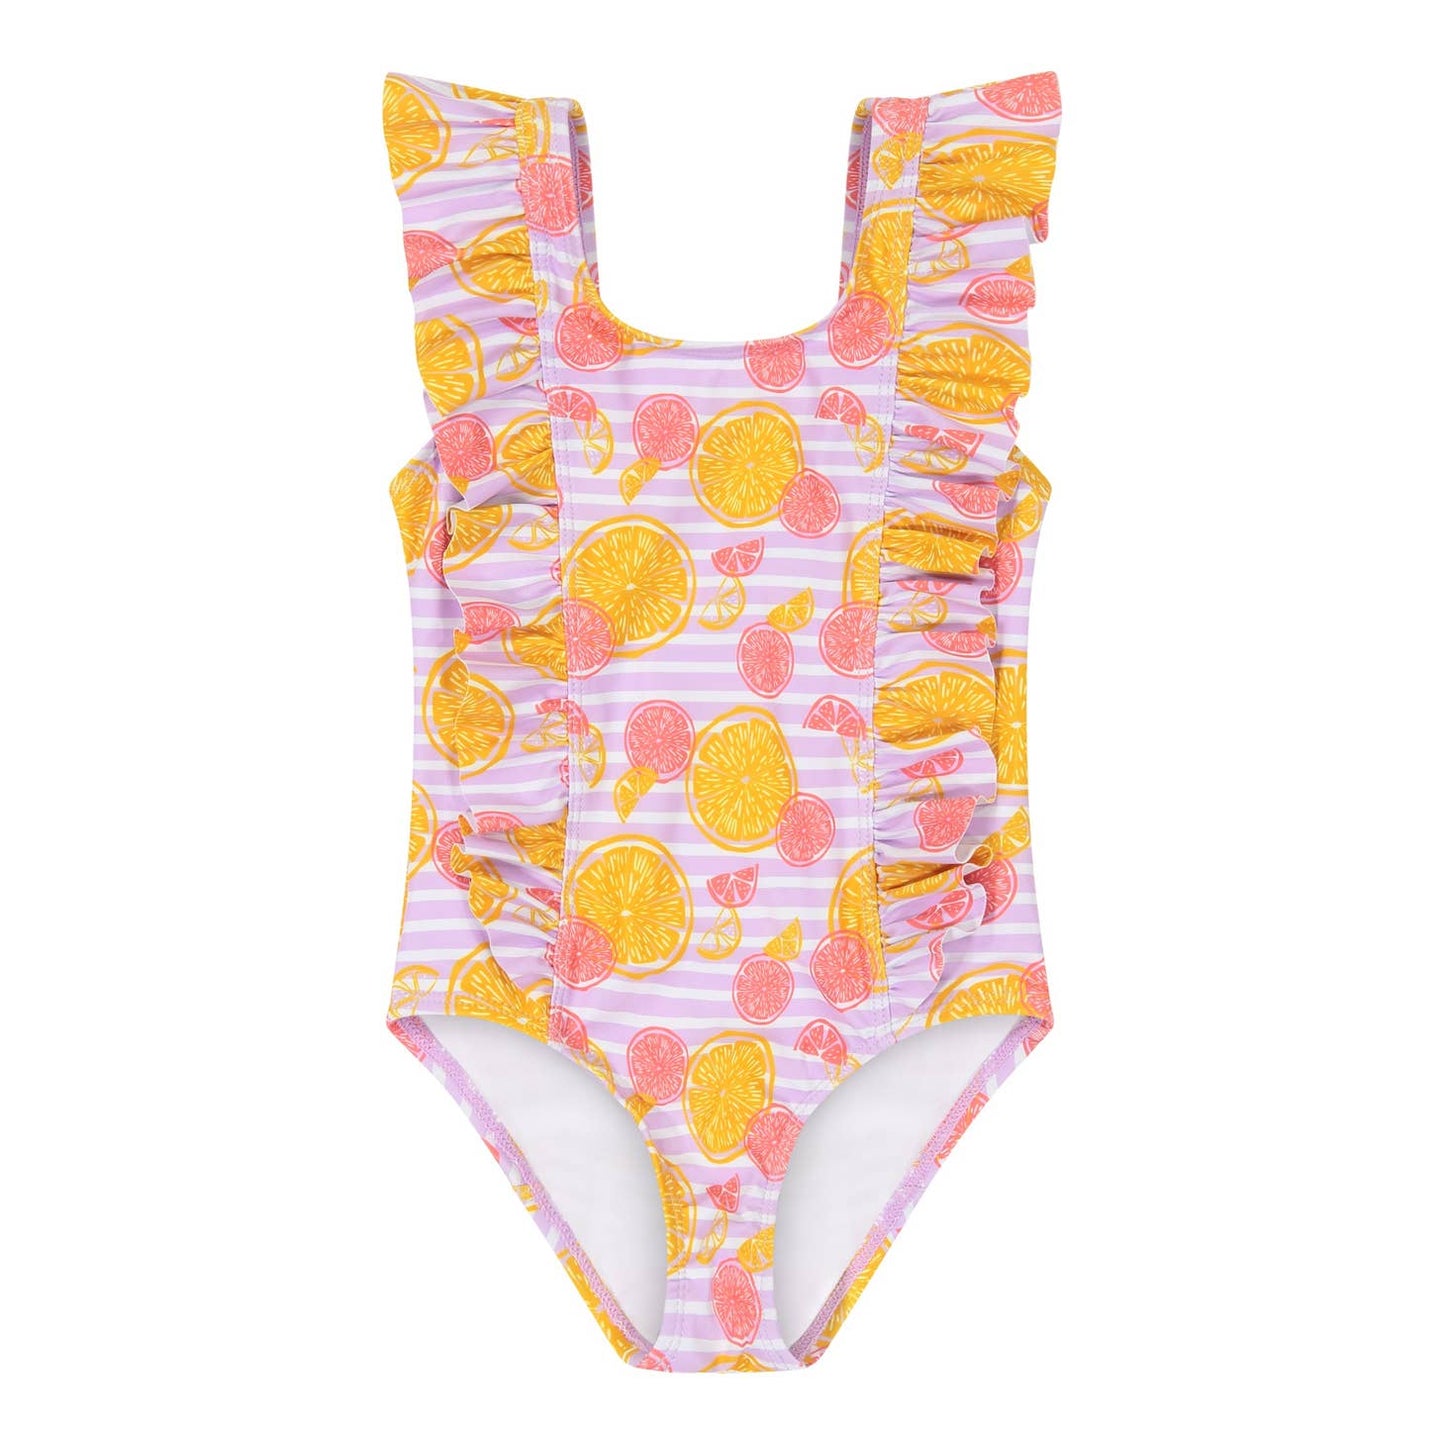 Andy & Evan girls grapefruit print ruffle swimsuit